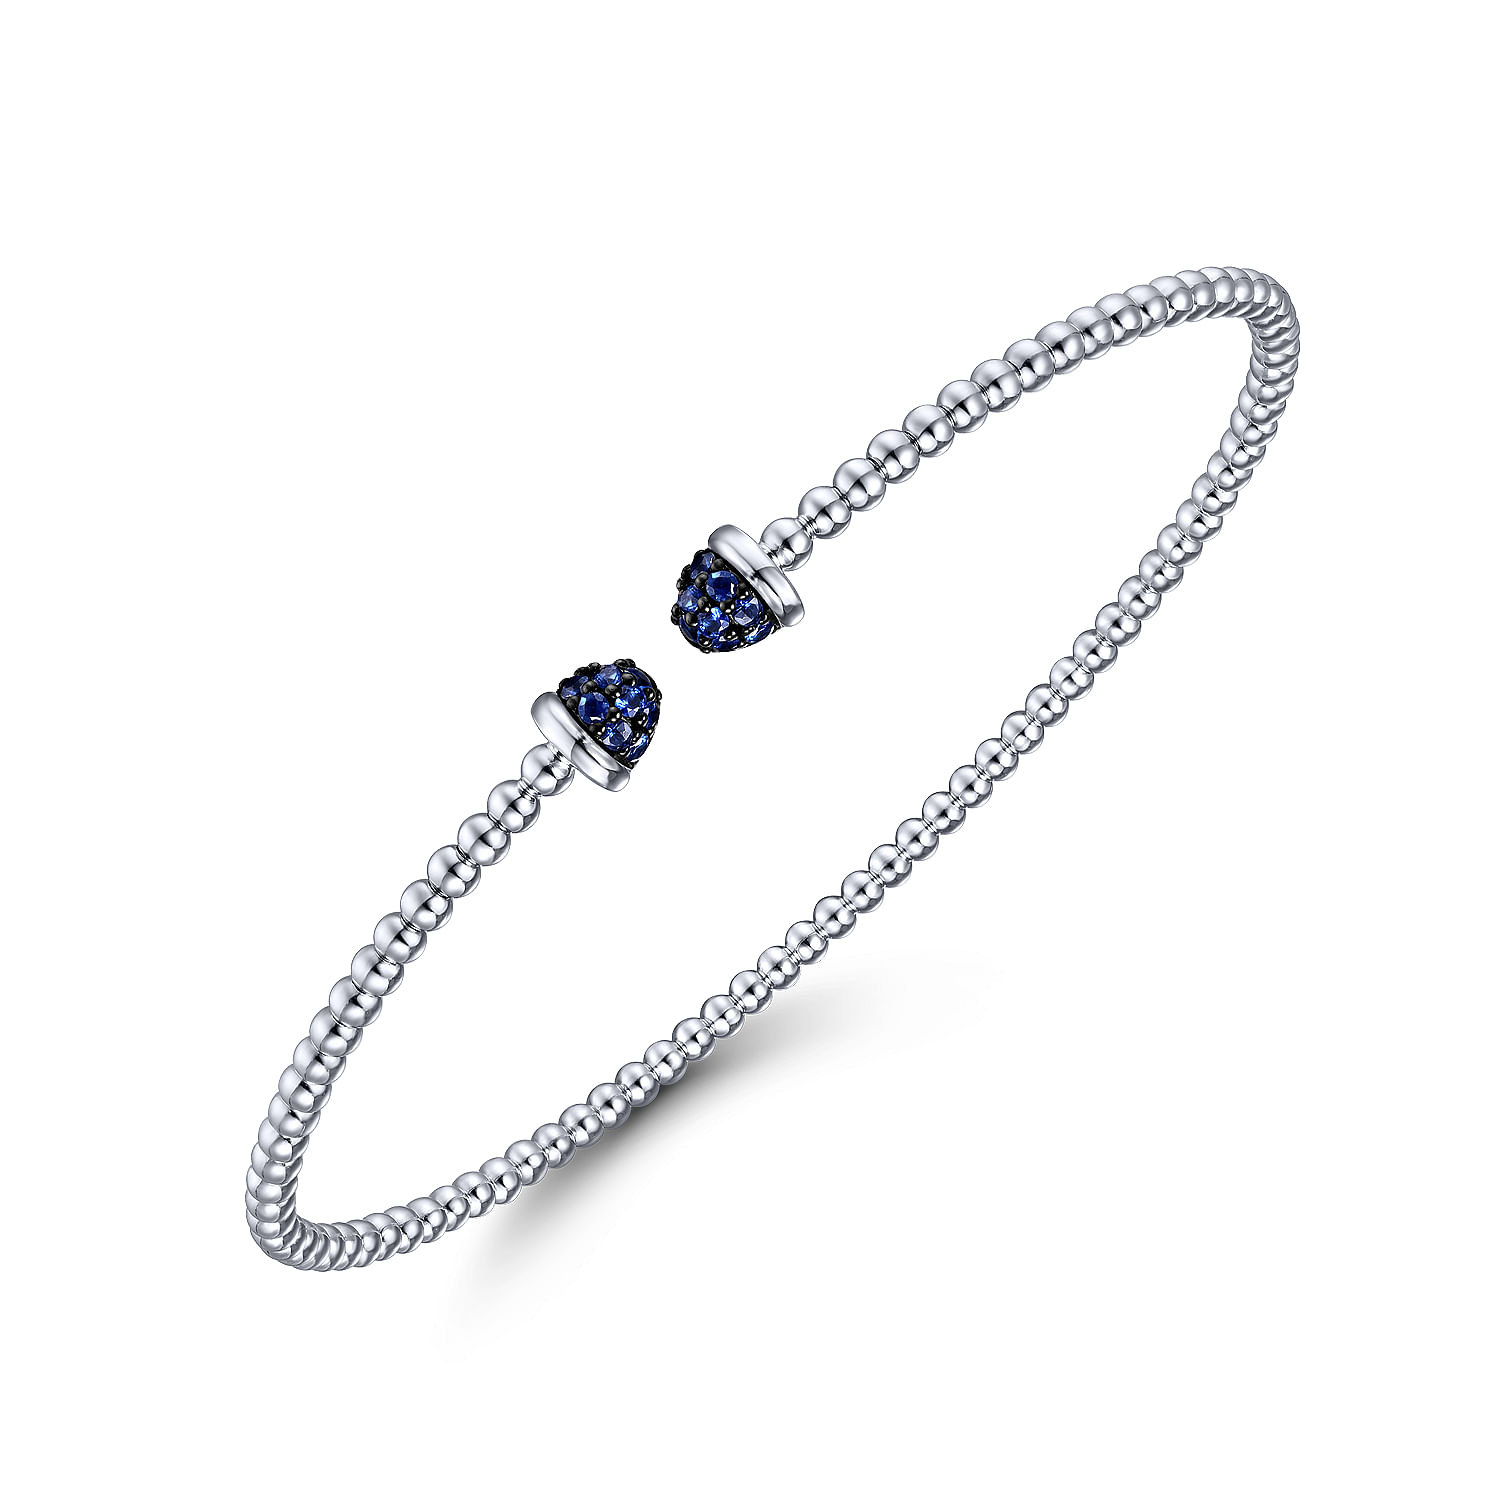 14K White Gold Bujukan Bead Cuff Bracelet with Sapphire Pavé Caps